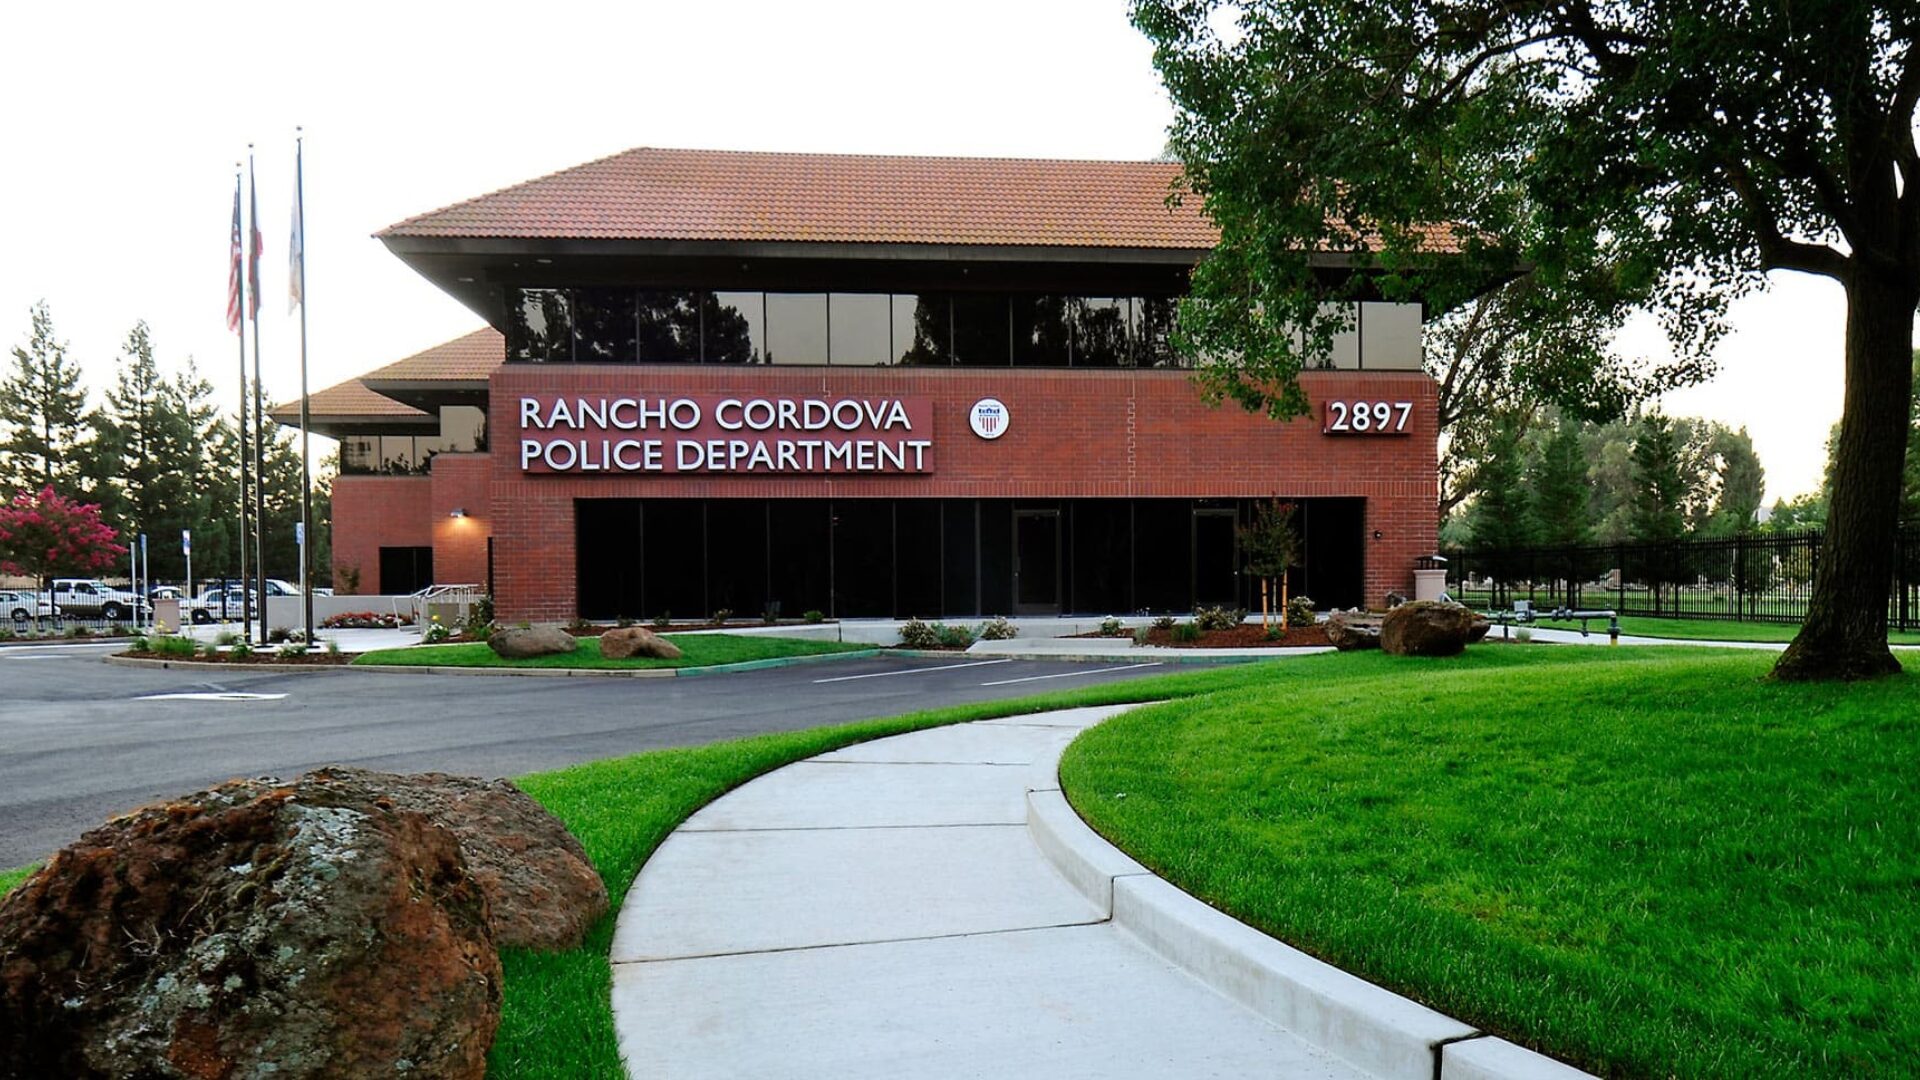 Rancho Cordova Police Department Aaa0018.